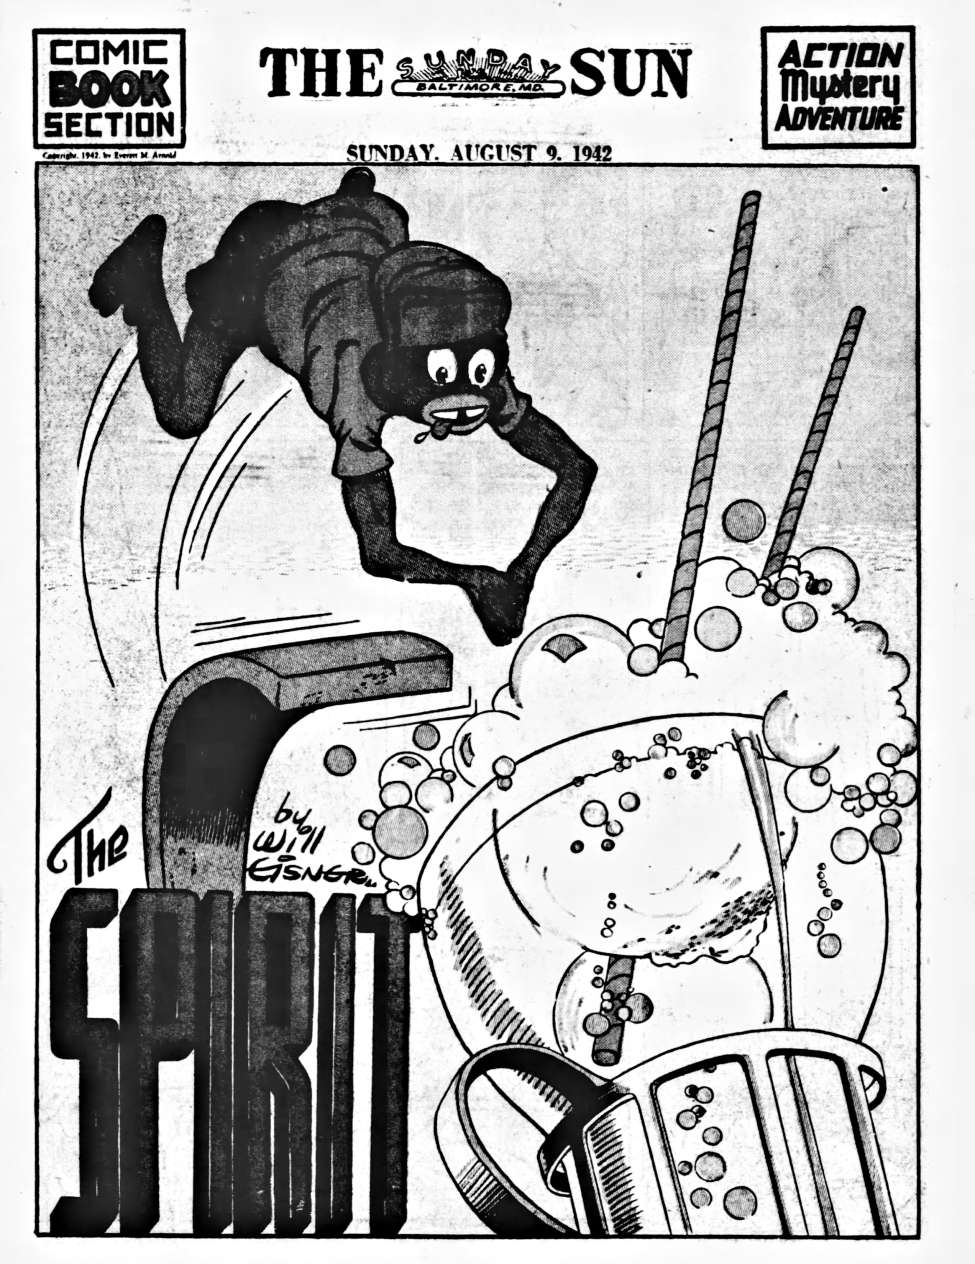 Comic Book Cover For The Spirit (1942-08-09) - Baltimore Sun (b/w)